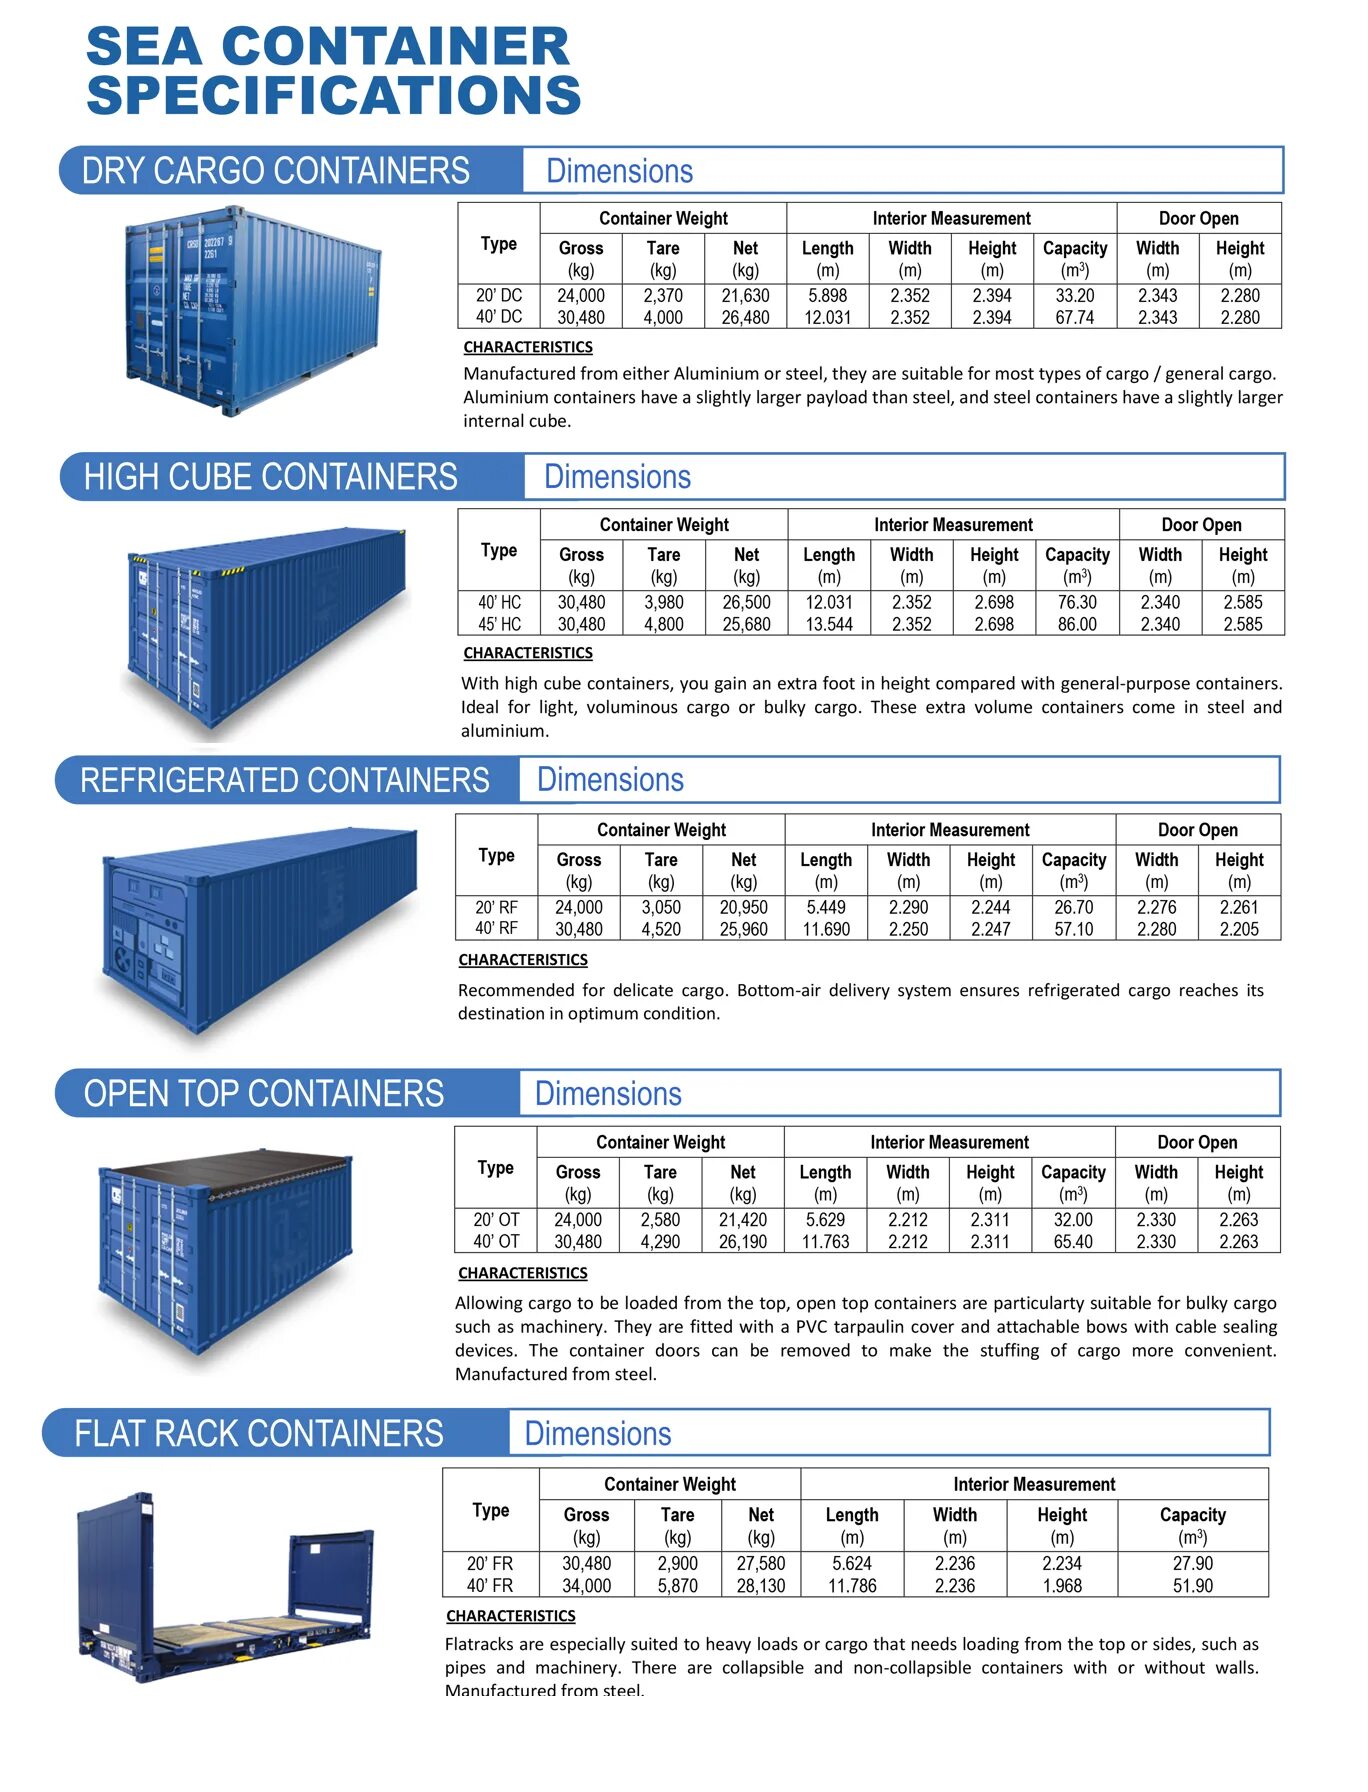 Контейнер 40фт High Cube габариты. 40 Футовый High Cube контейнер DC ISO. Габариты 40 фут контейнера High Cube. Габариты контейнера ИСО-20.